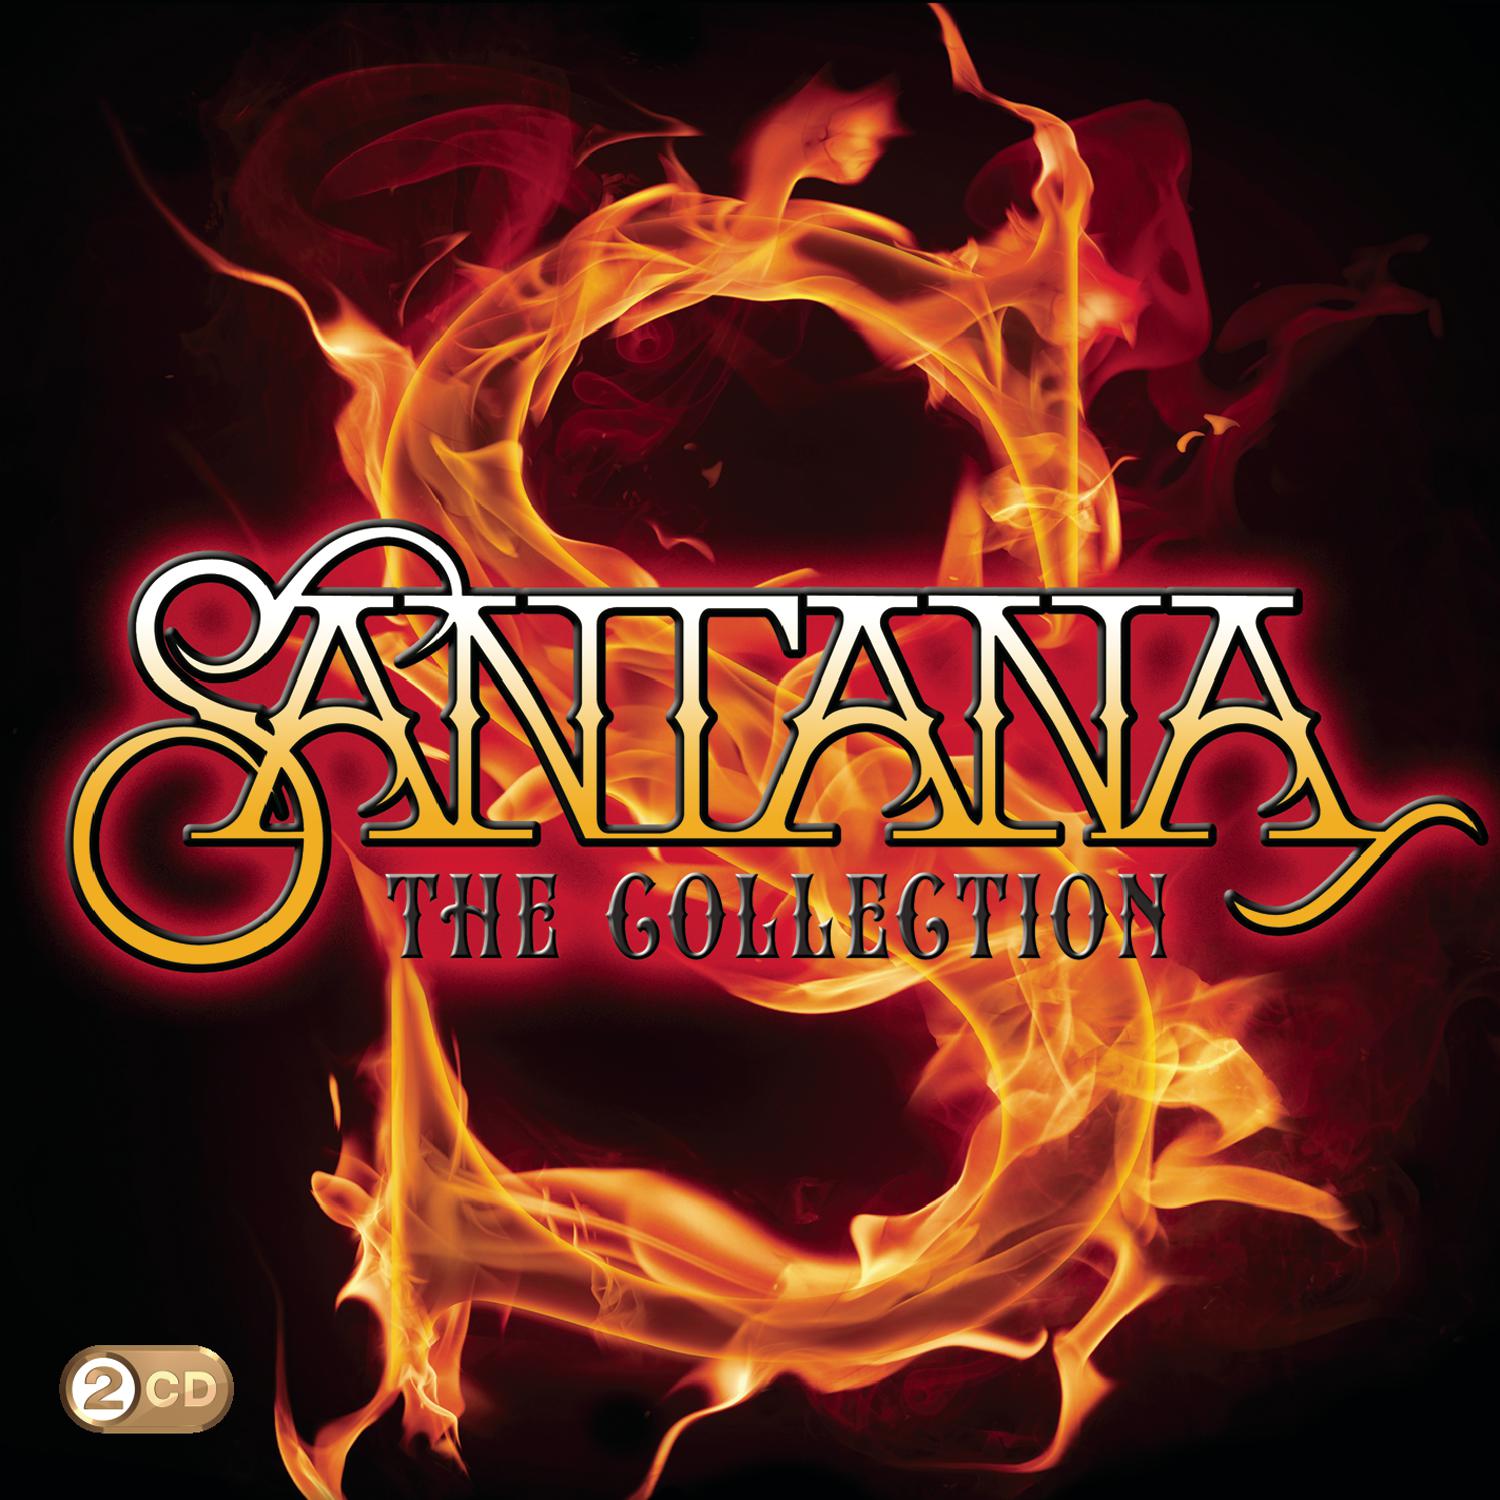 The Santana Collection